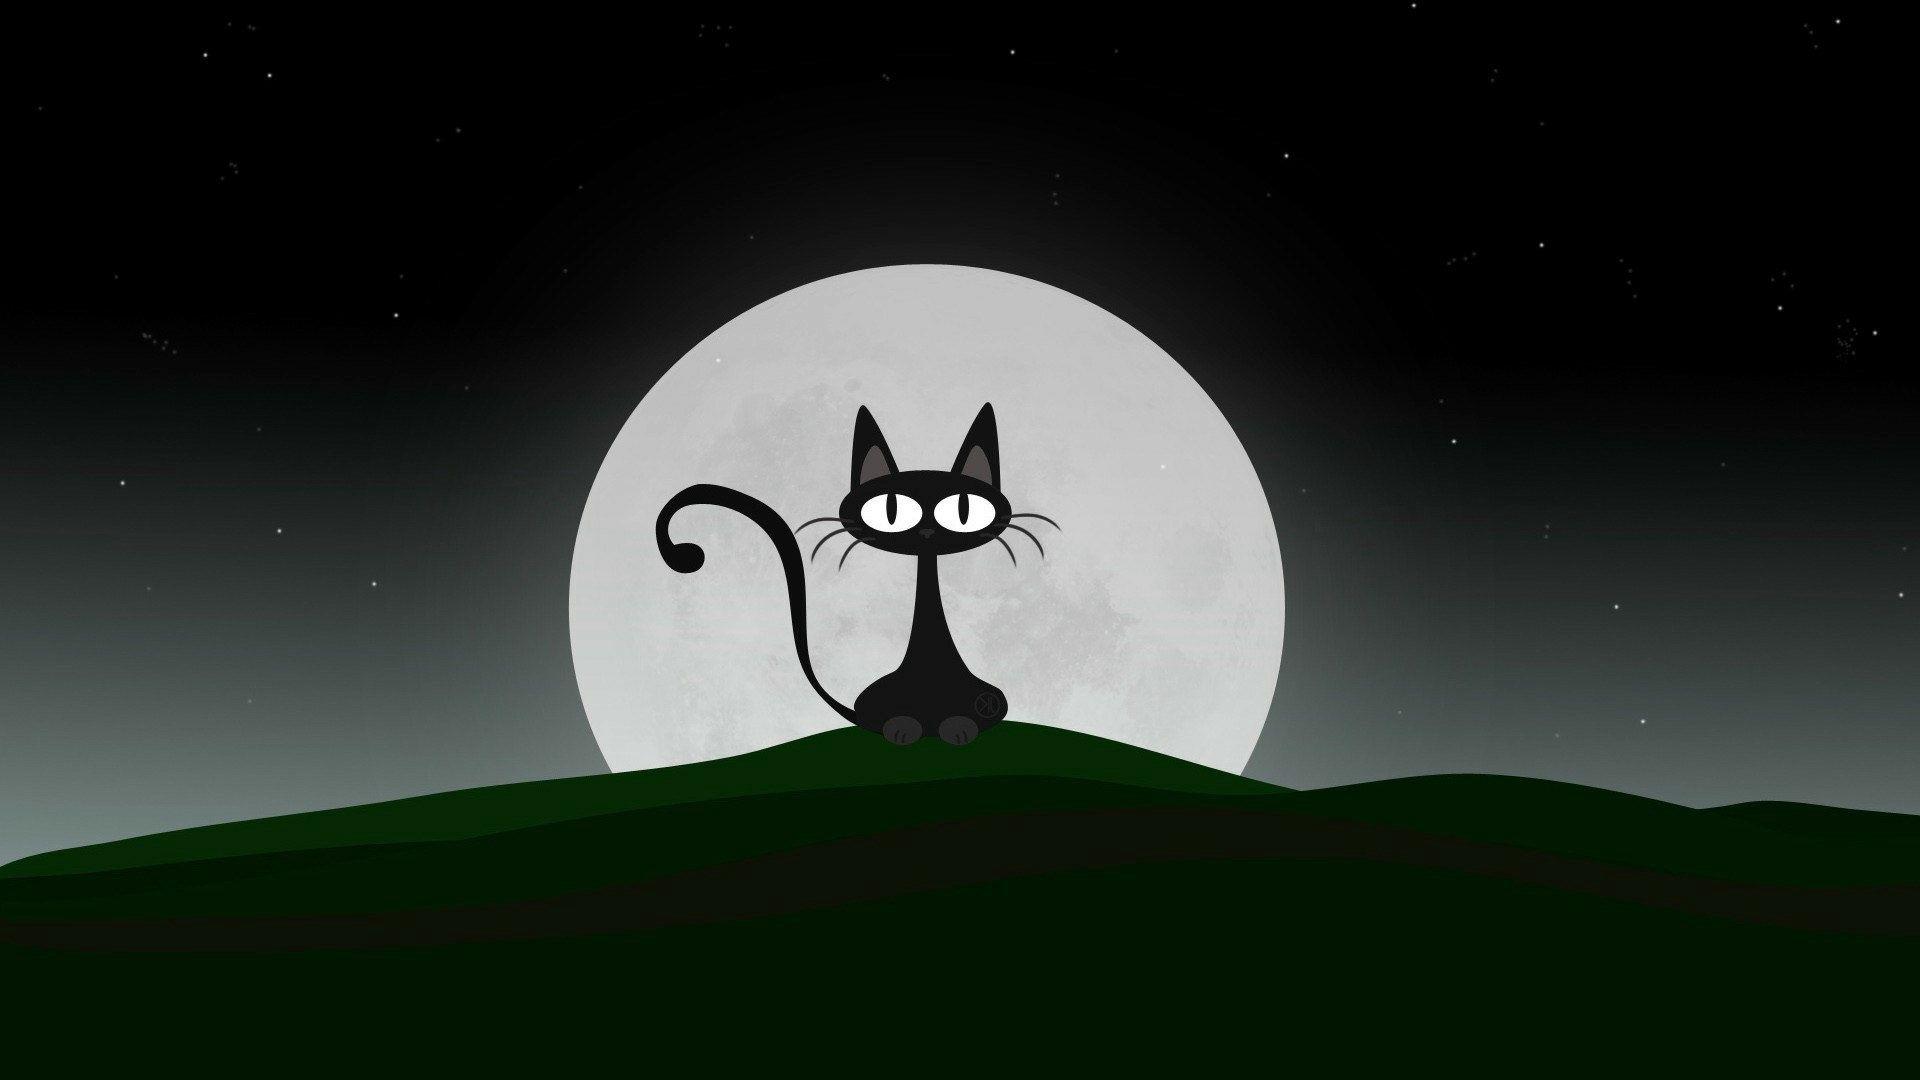 Hd 1920x1080 Black Cat And Moon Desktop Wallpaper Background. Langit malam, Langit, Malam